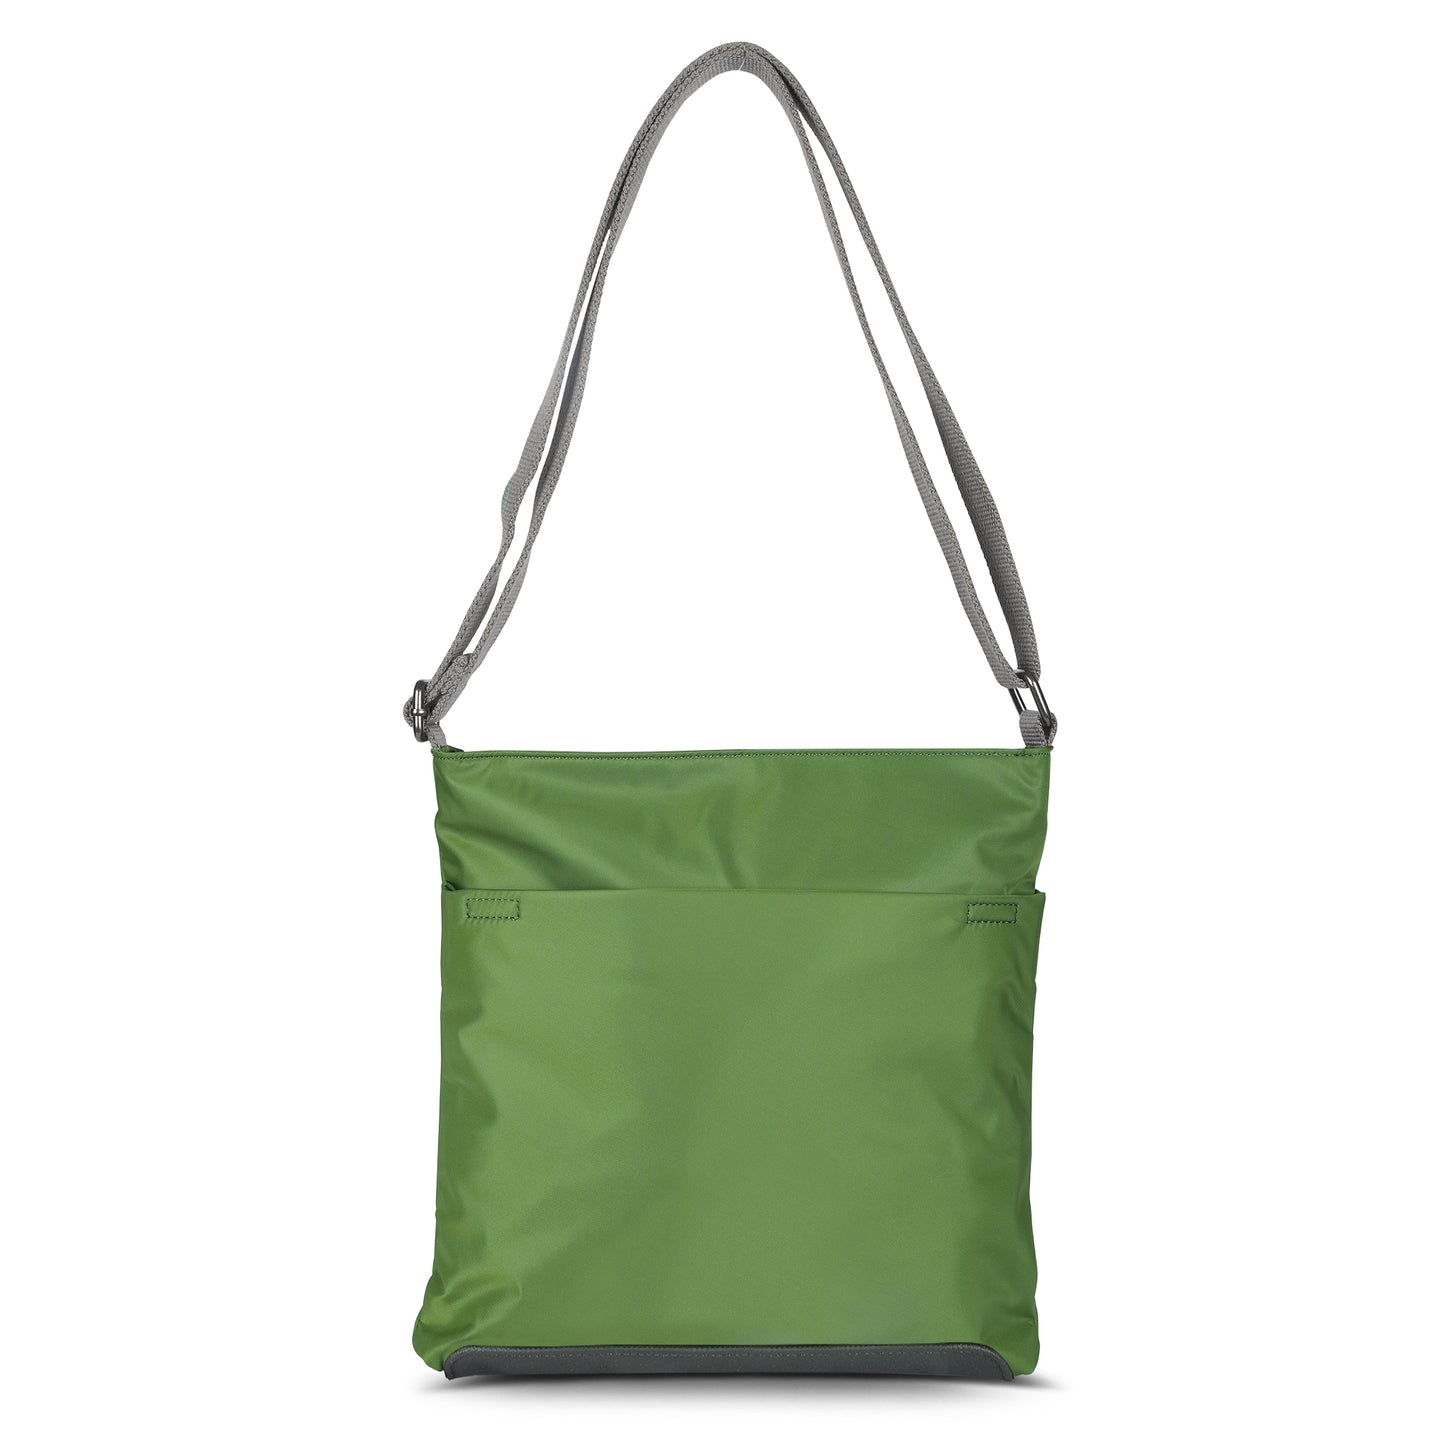 Roka Kennington Crossbody Bag - Avocado Green